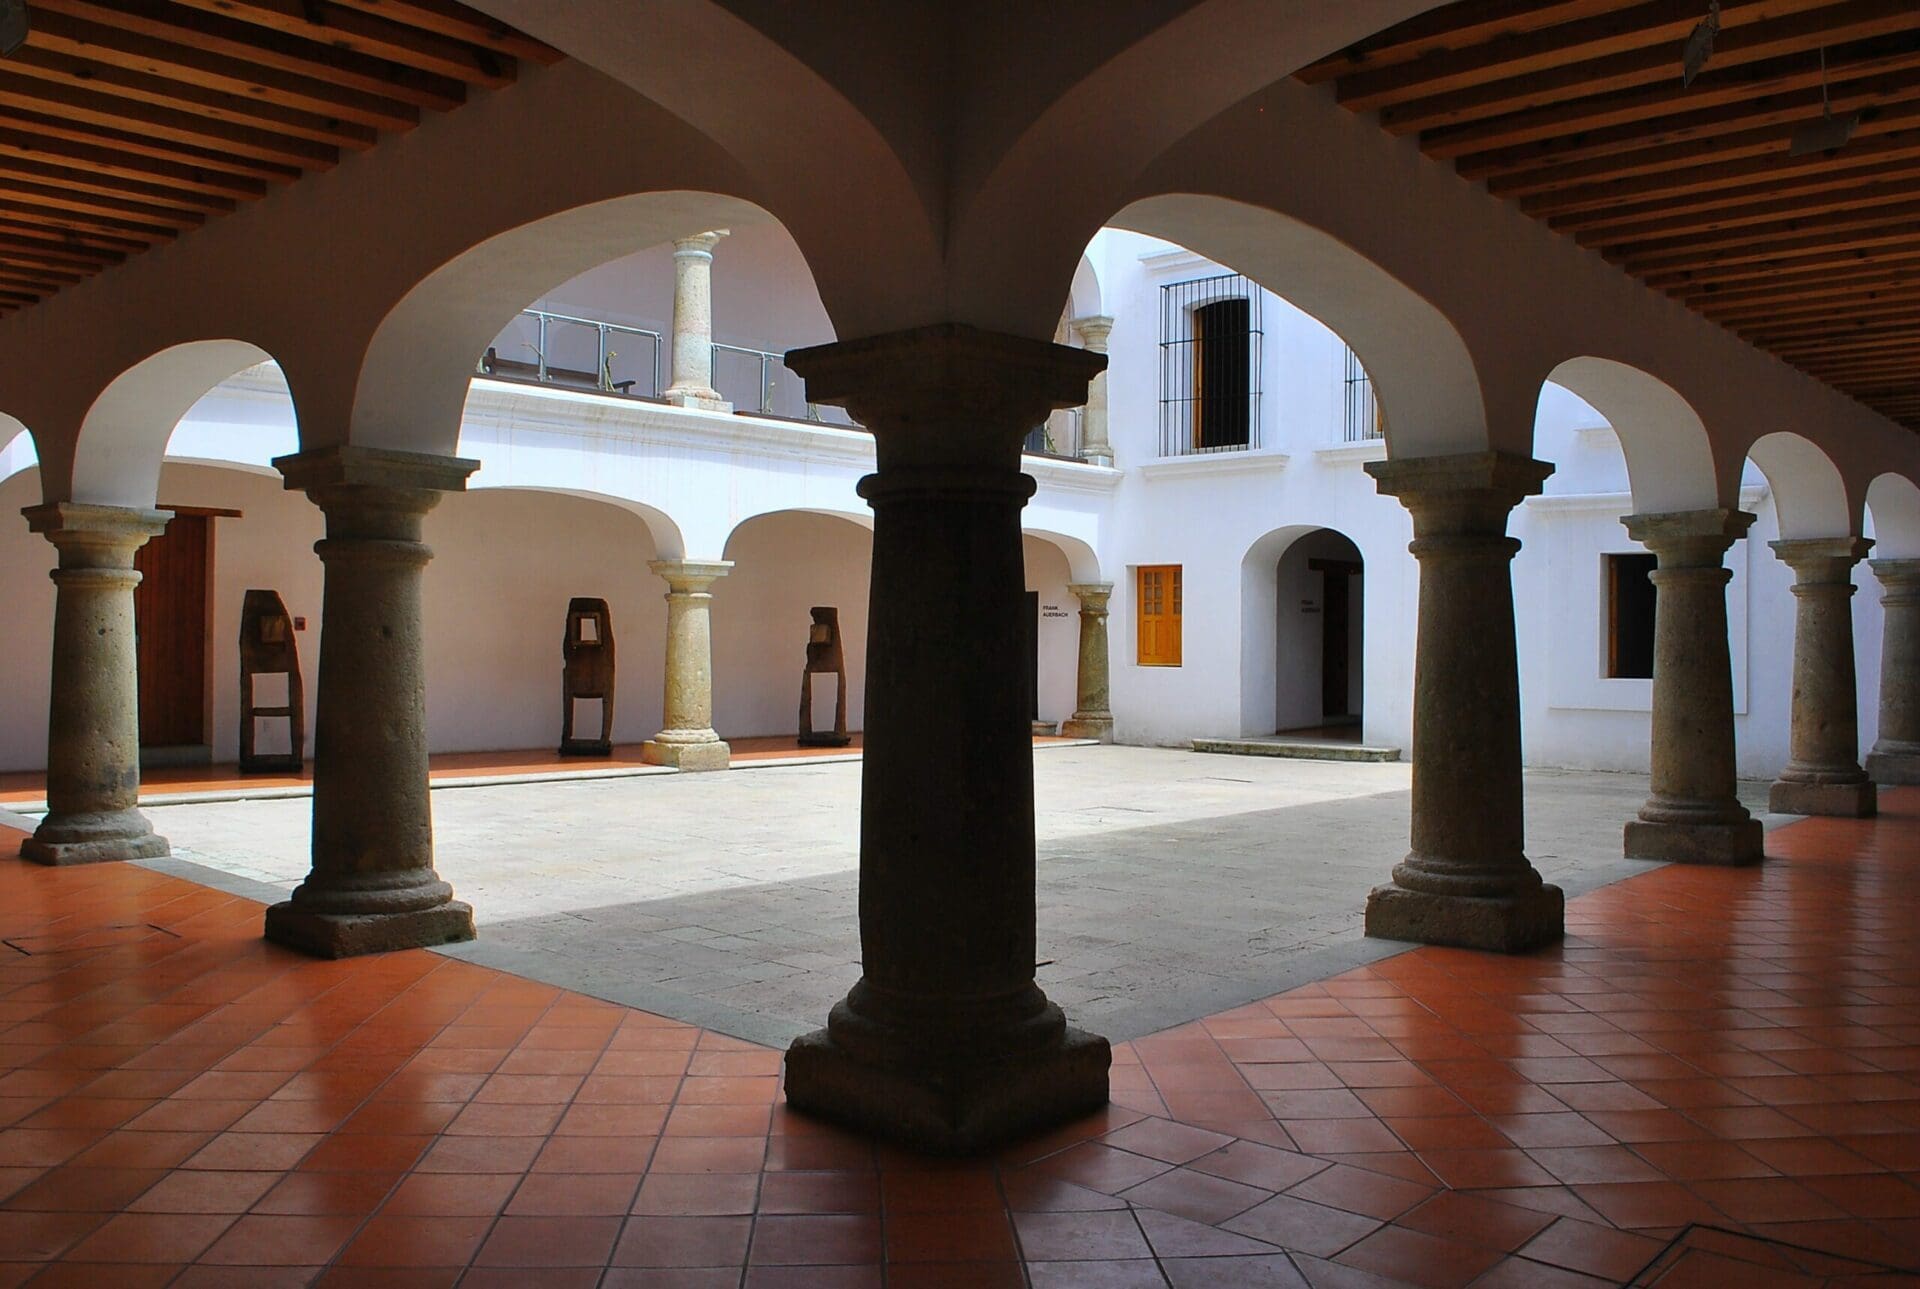 MACO, Oaxaca